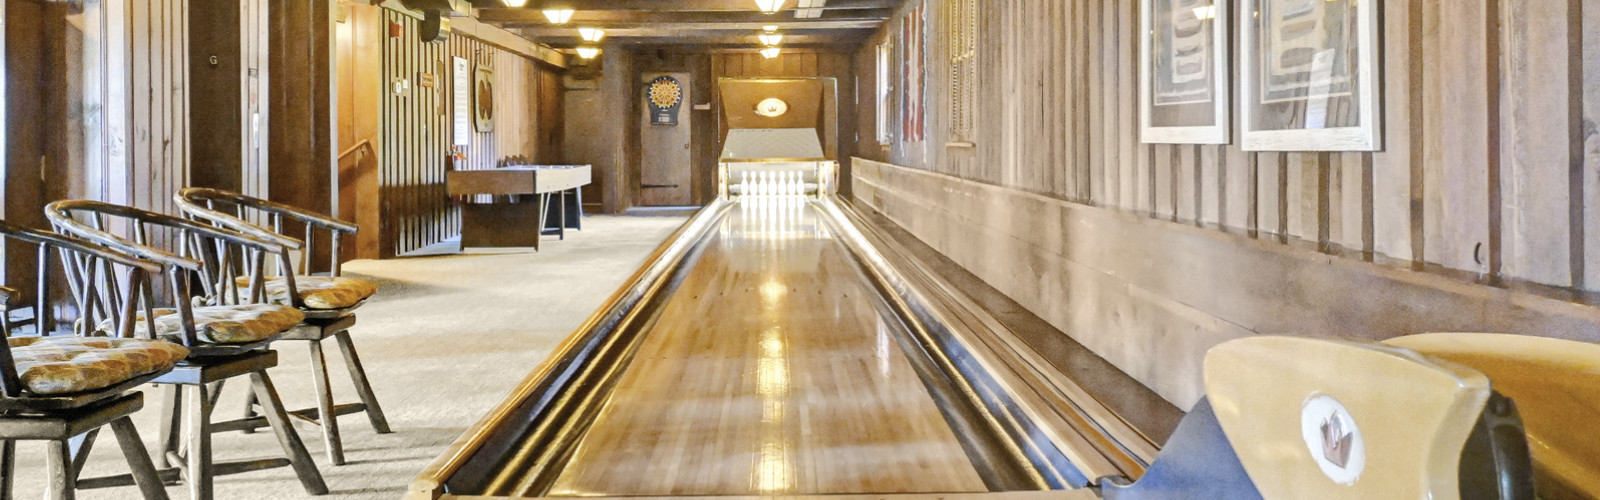 recreation bowling